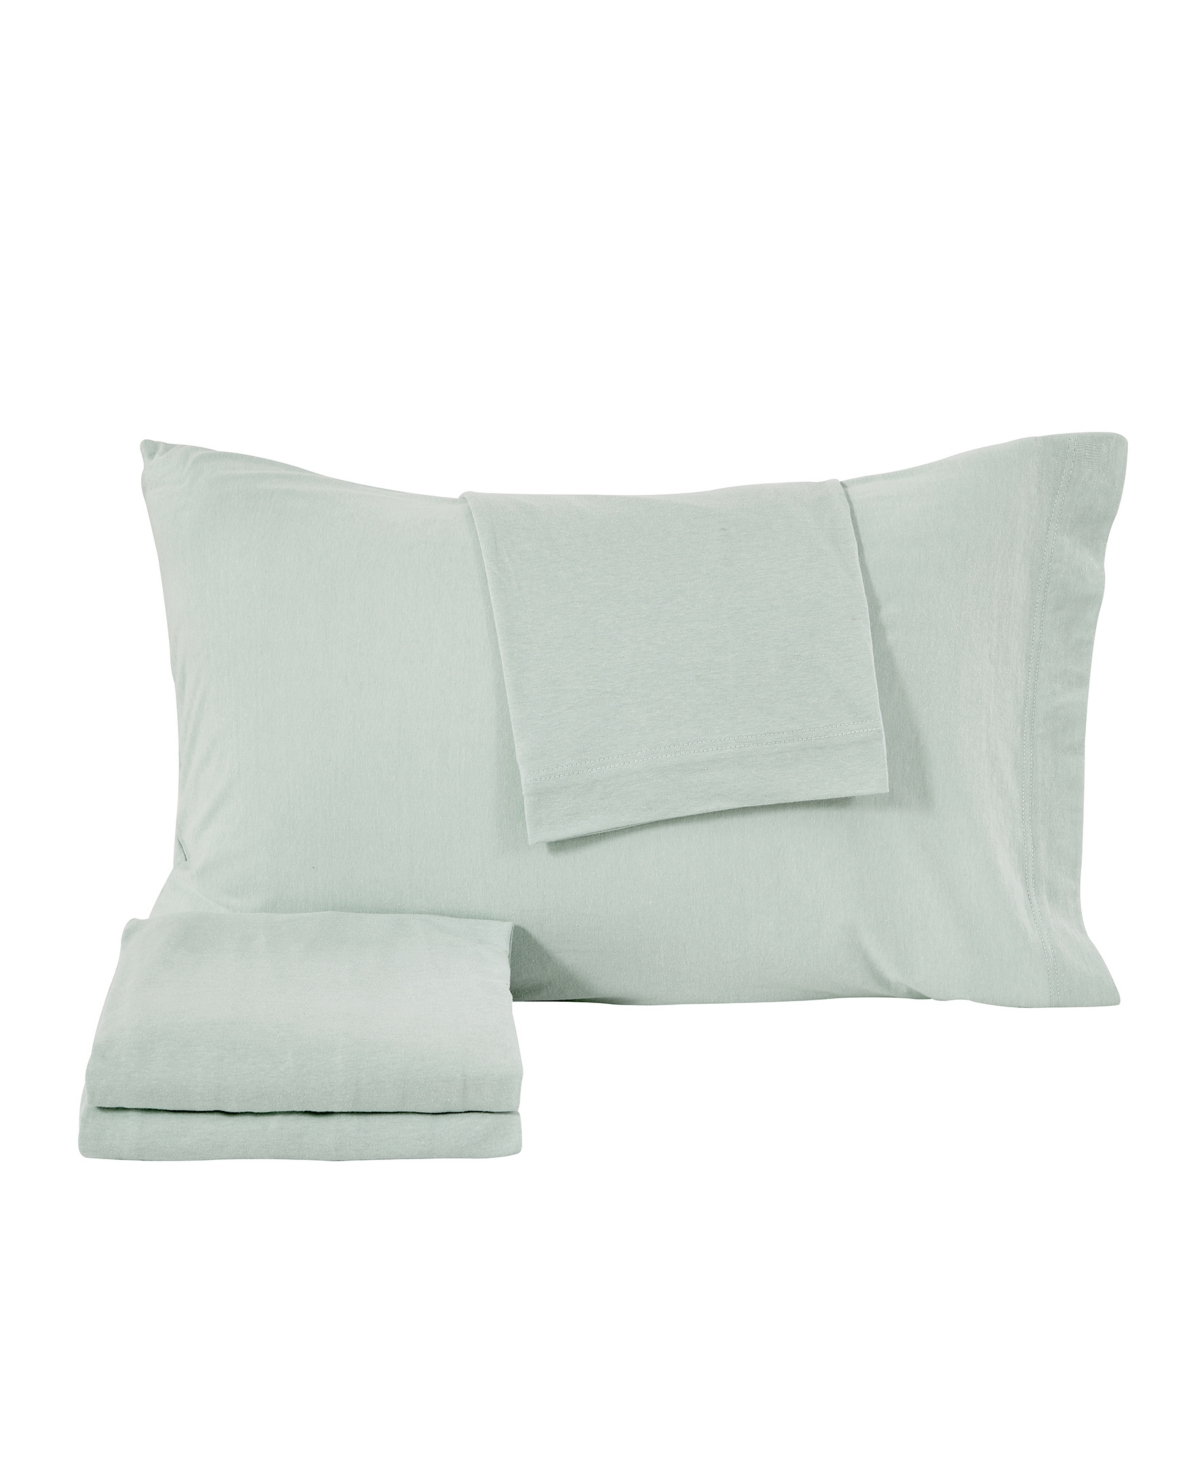 Premium Comforts Heathered Melange T-shirt Jersey Knit Cotton Blend 4 Piece Sheet Set, King In Heathered Aqua